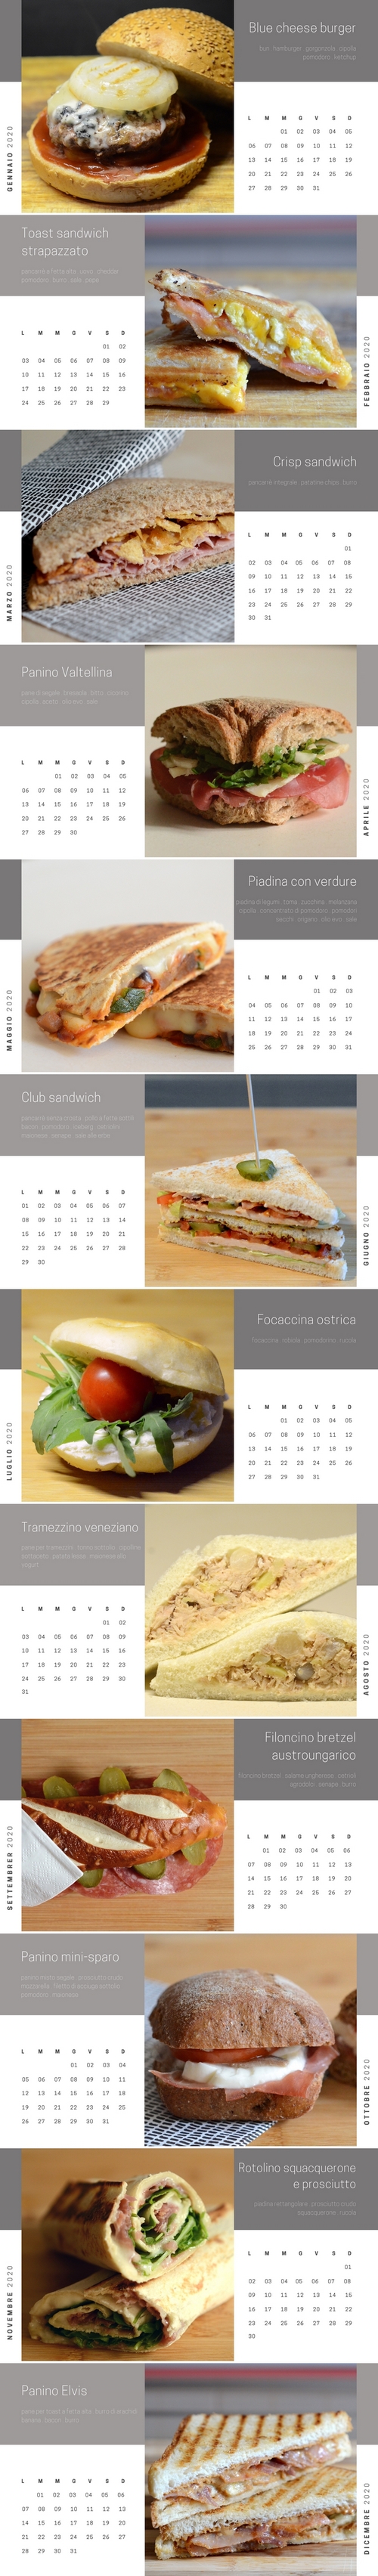 calendario 2020 panini ricettario elena